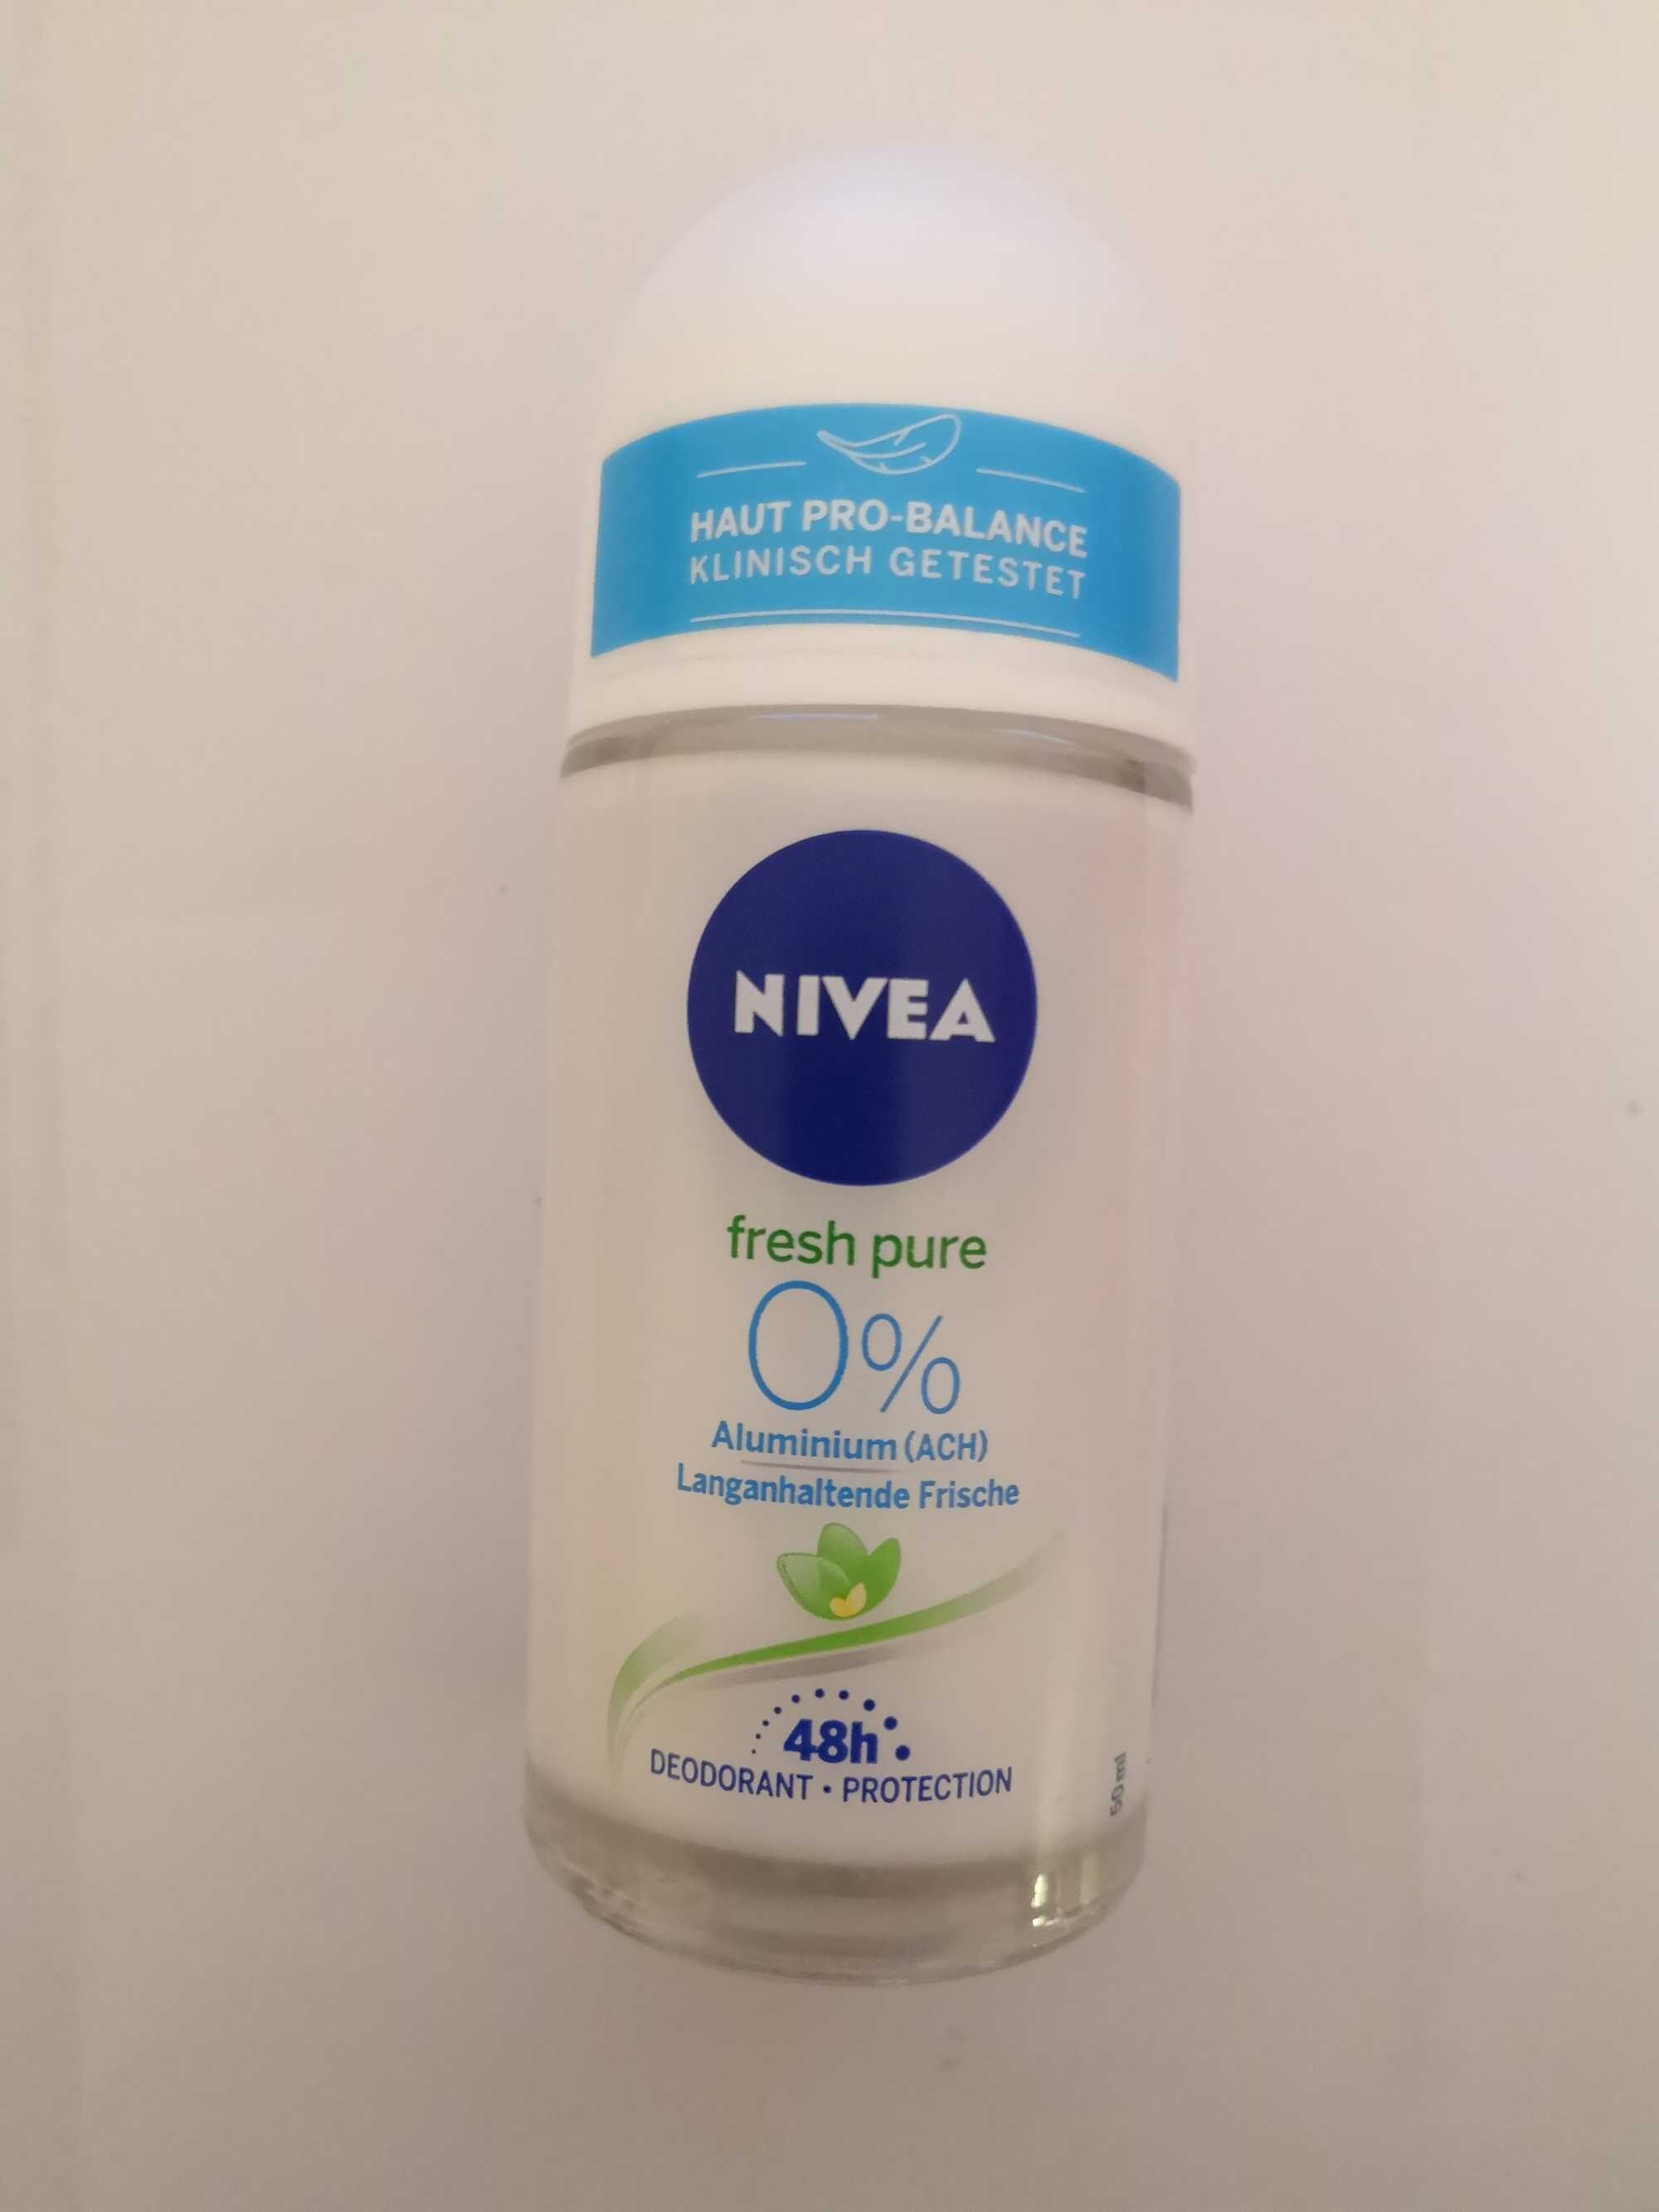 NIVEA fresh pure 0% Aluminium 48h Deodorant Protection - Produkt - de